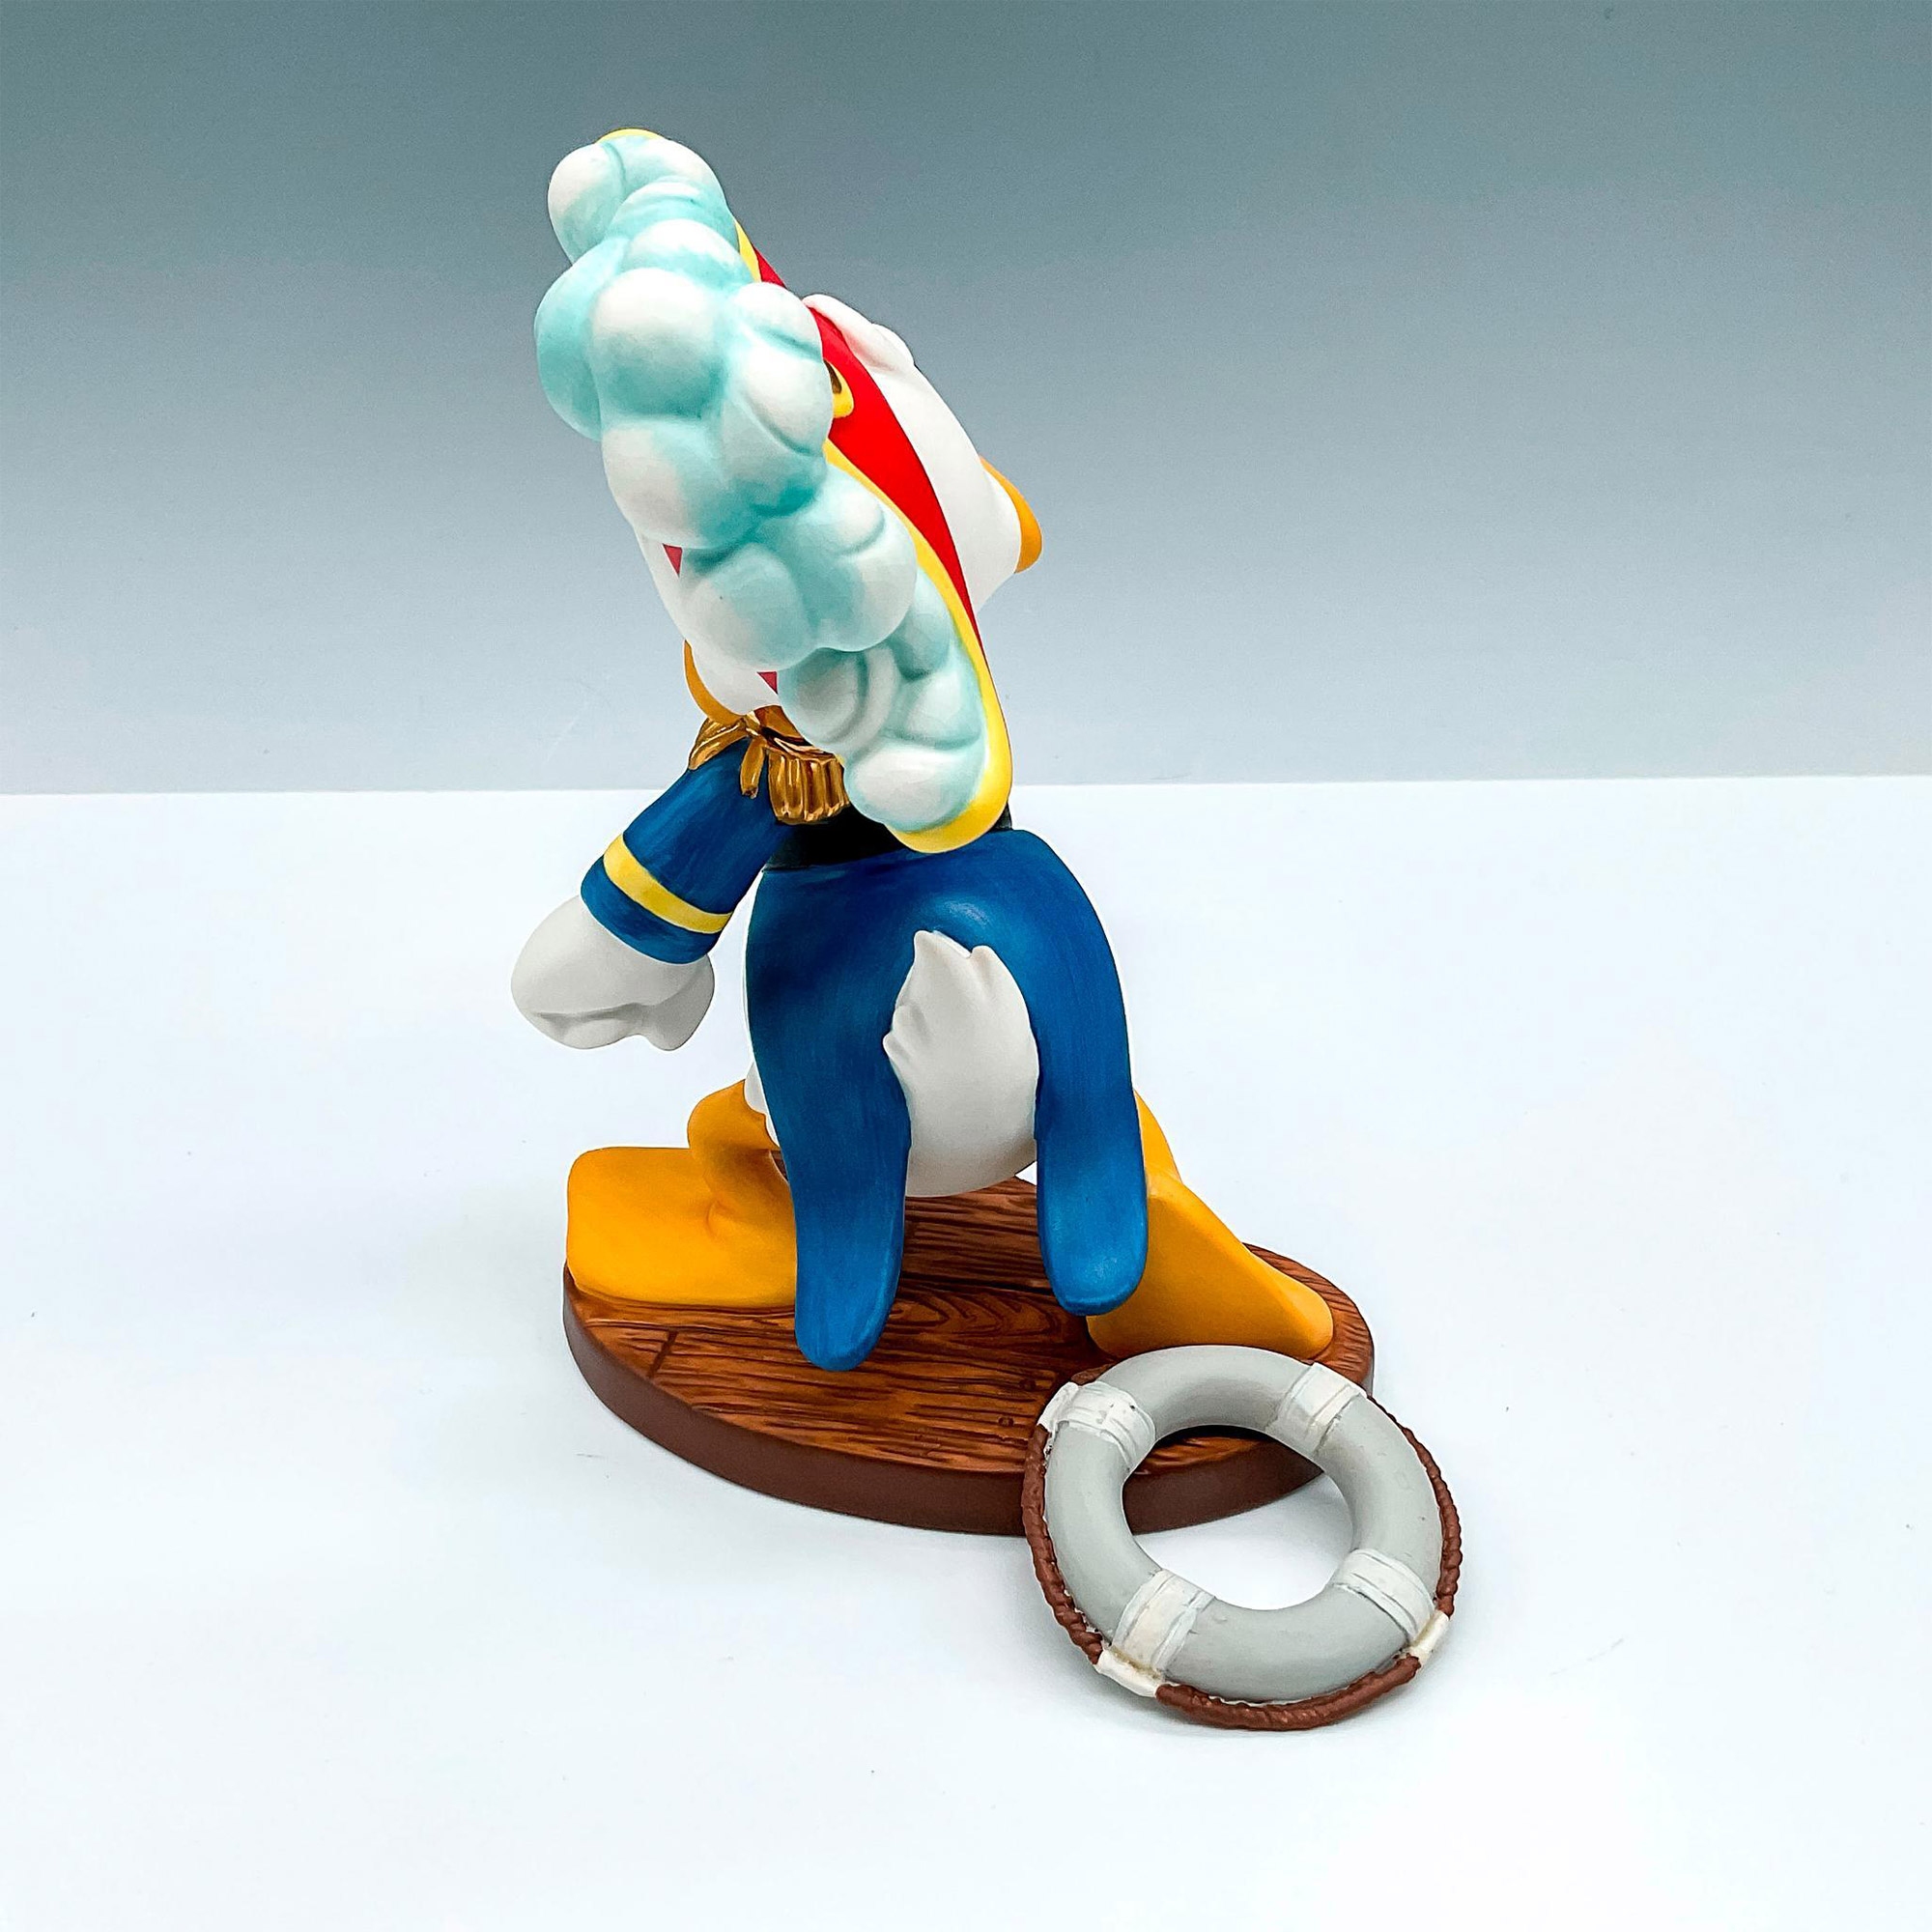 Walt Disney Classic Collection Figurine Donald Duck - Image 2 of 4